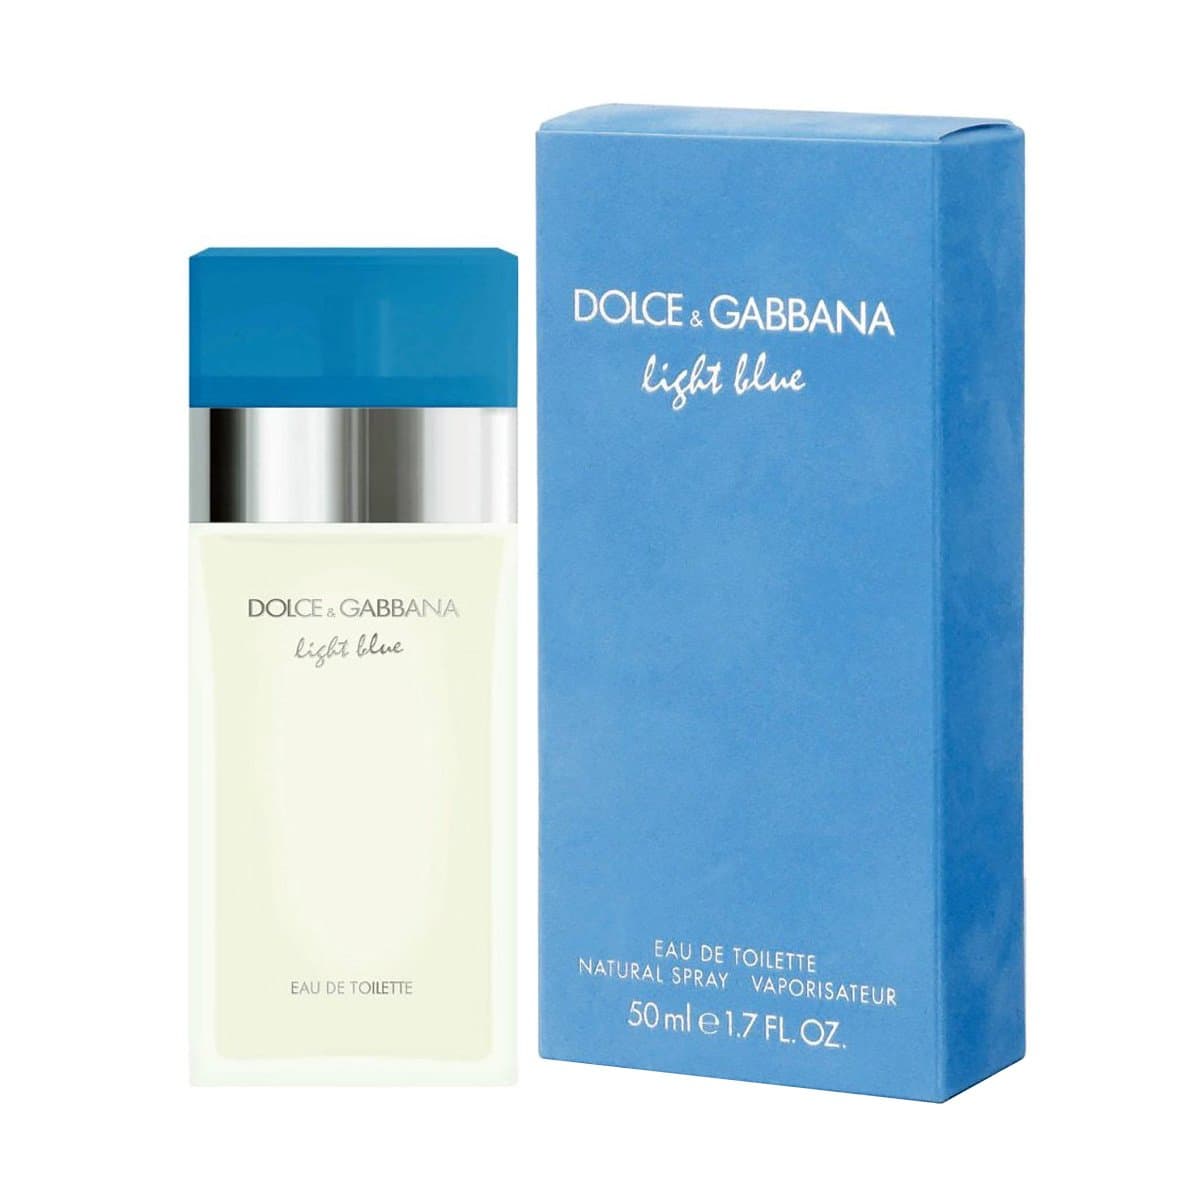 Аромат дольче габбана отзывы. Dolce Gabbana d g Light Blue 100 мл. Dolce Gabbana Light Blue женские 100 мл. Dolce Gabbana Light Blue женские 50 мл. Light Blue Dolce & Gabbana, 100ml, EDT.